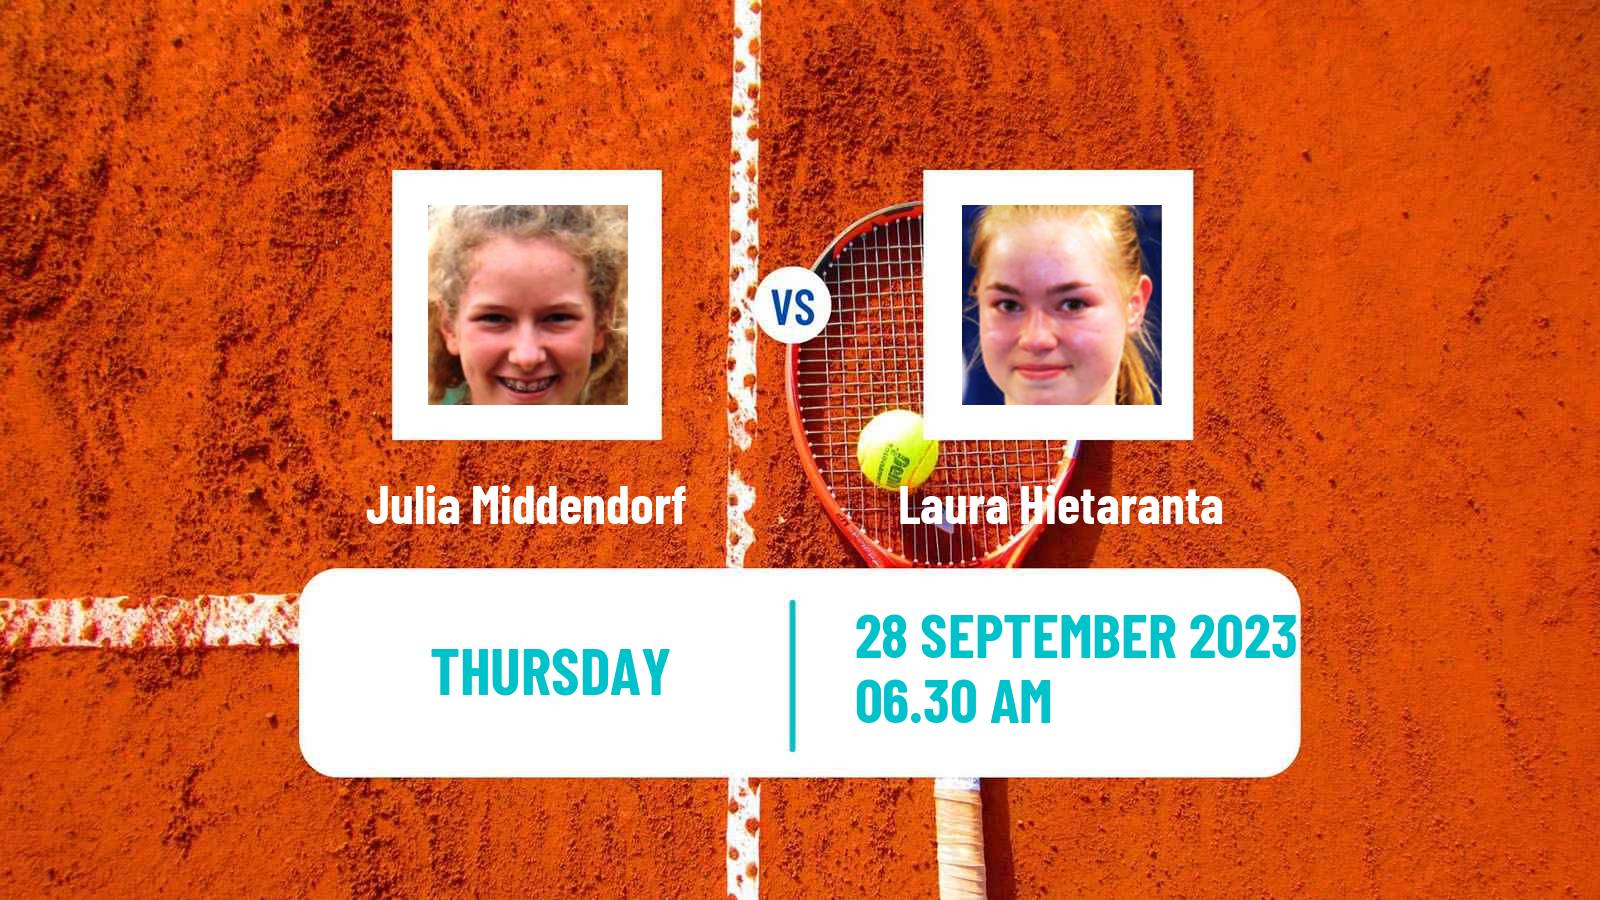 Tennis ITF W25 Santa Margherita Di Pula 12 Women Julia Middendorf - Laura Hietaranta